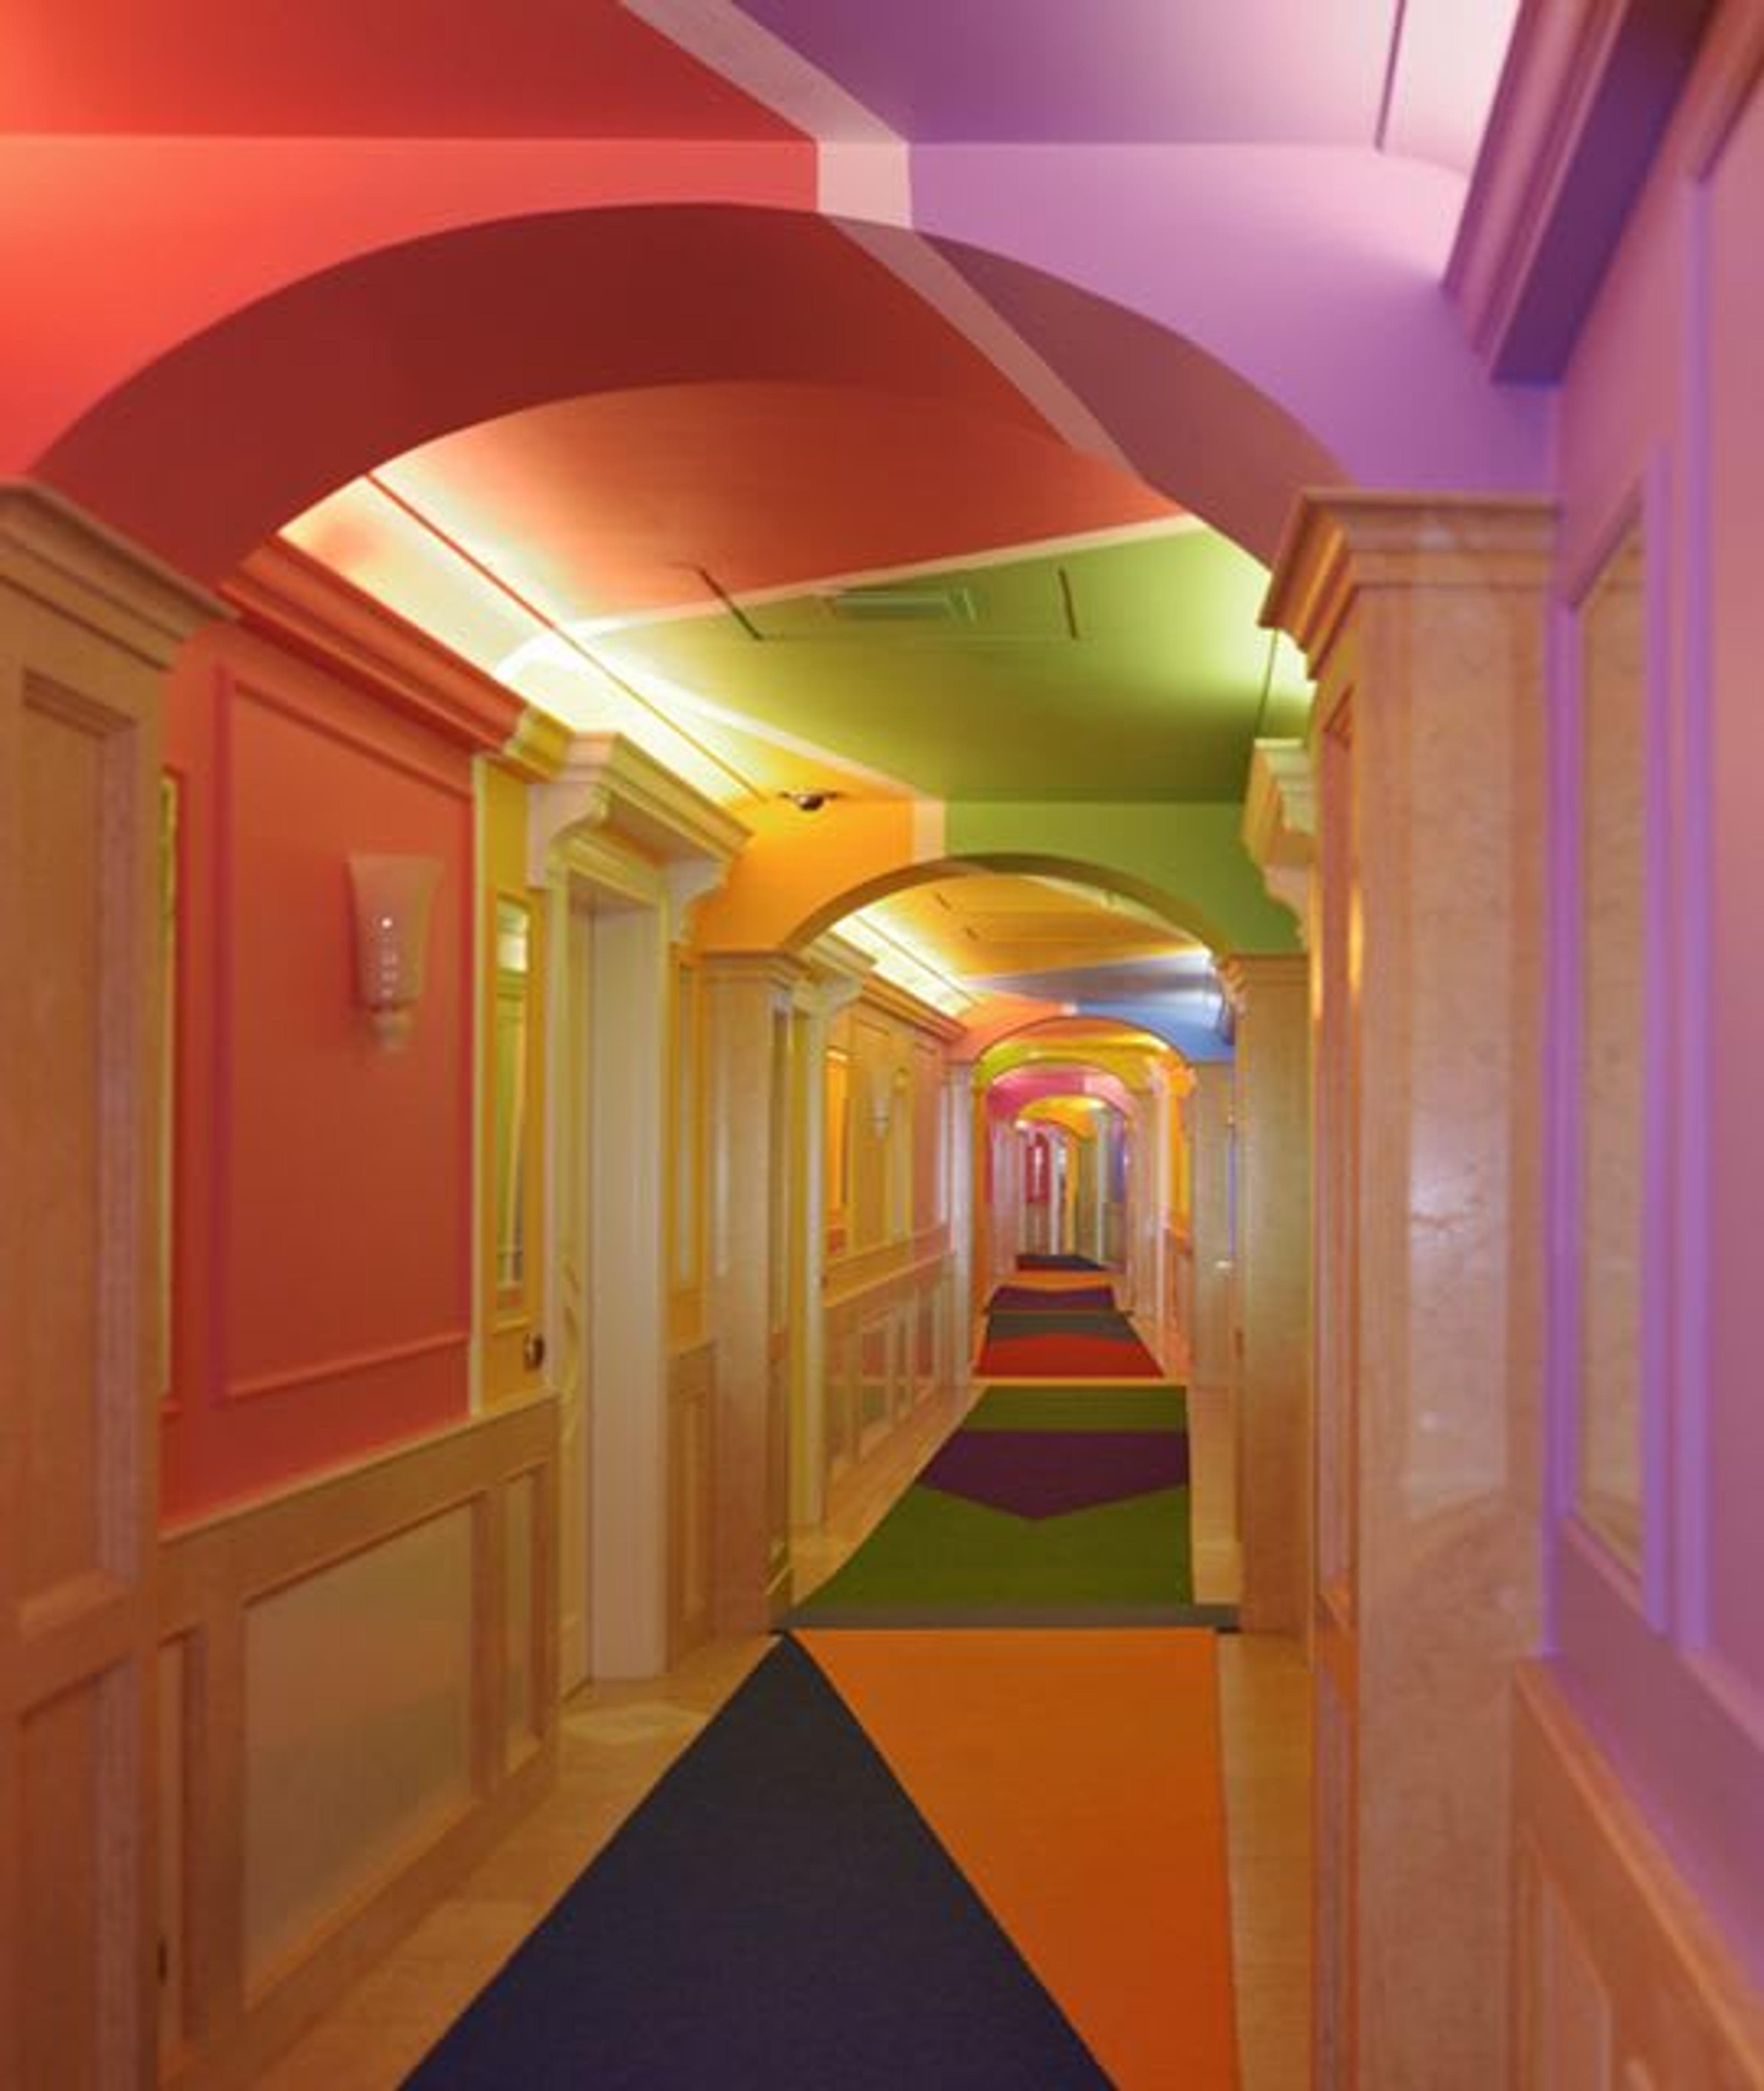 Farbenfrohe Innenräume des Hotels.